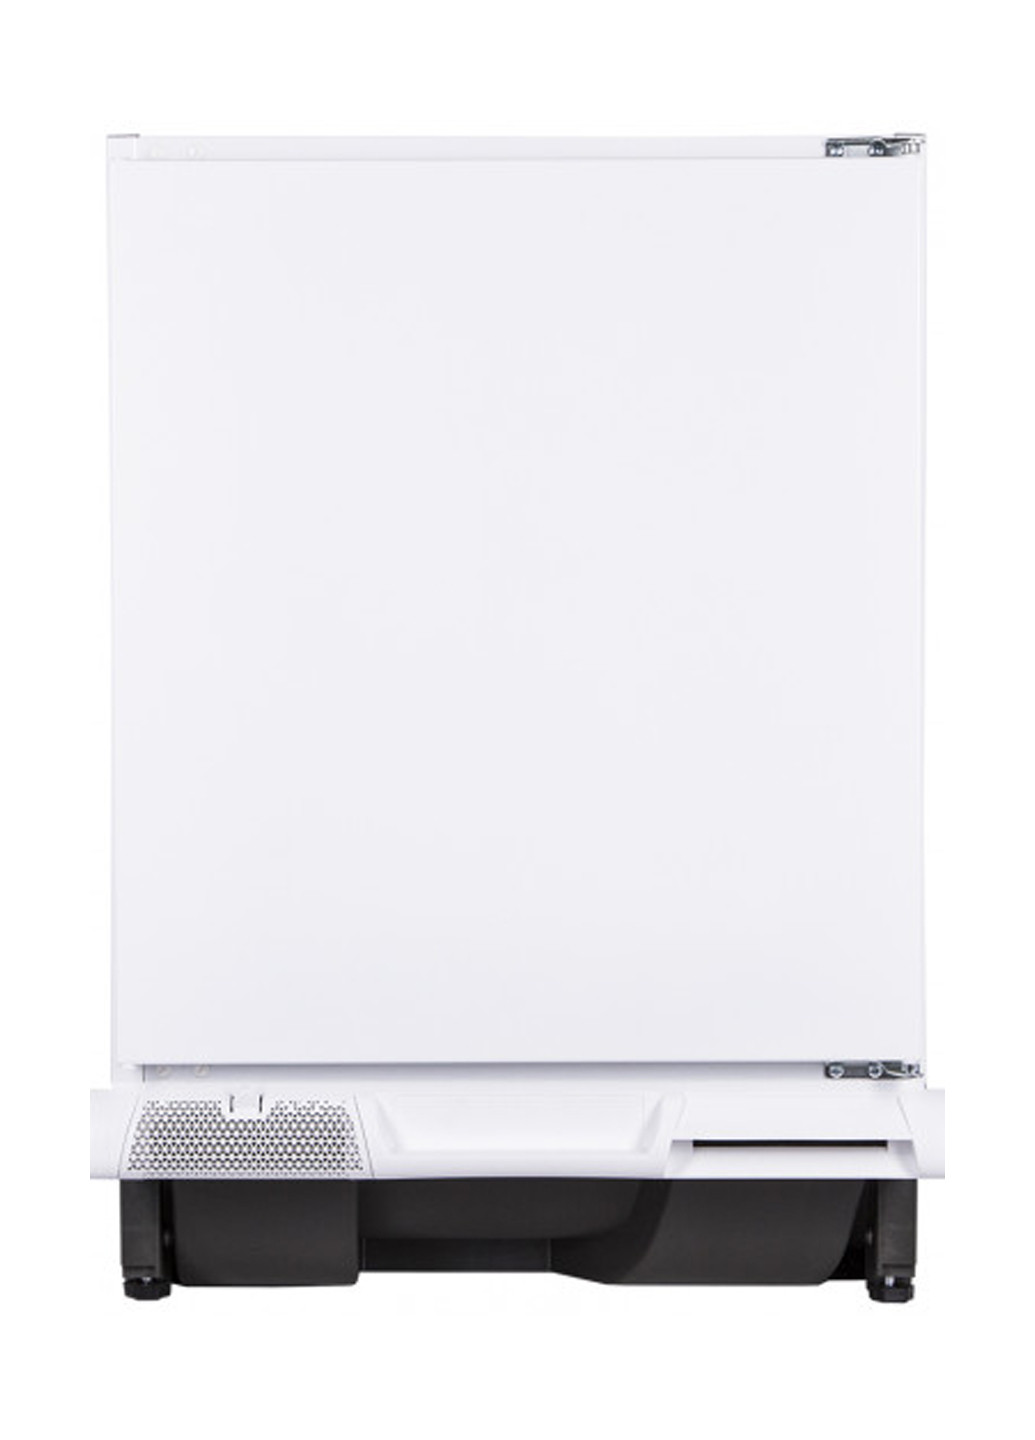 Холодильник ZANUSSI zua14020sa (133777645)